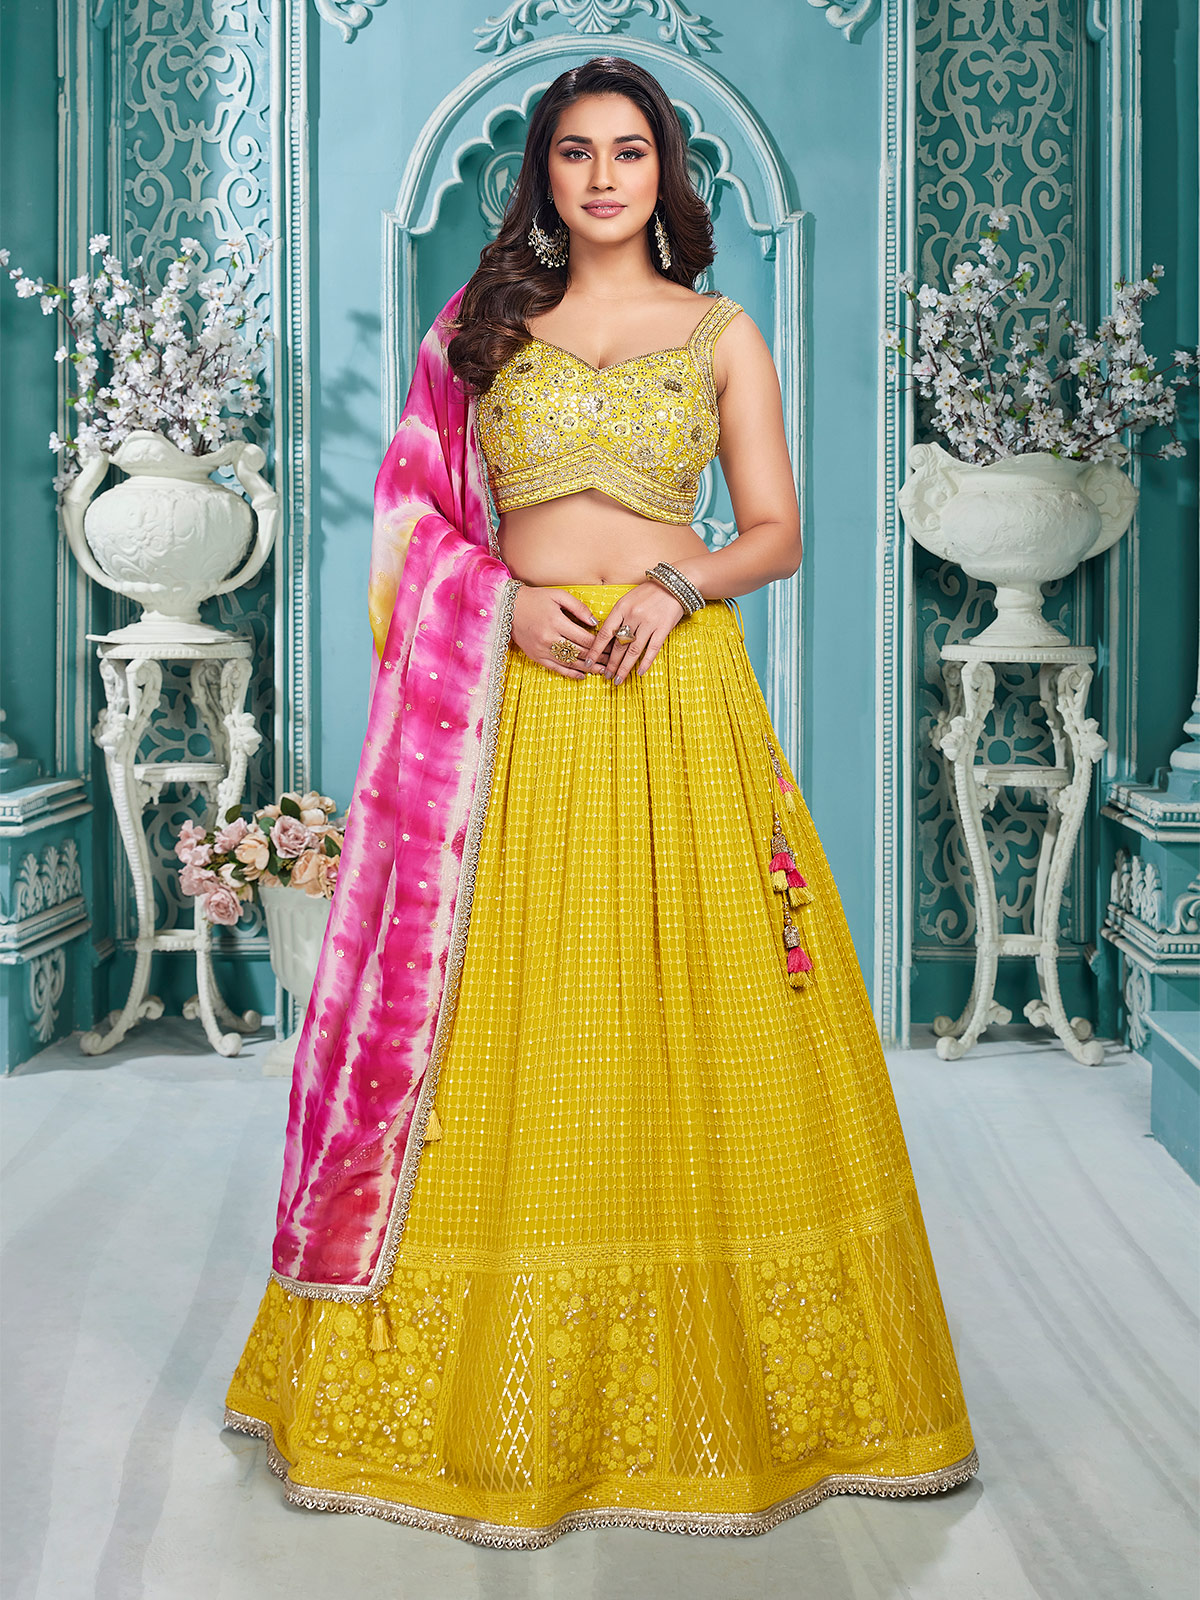 Indian Bridal Wear - Kreeva Green and Yellow Lehenga by B Anu Designs-gemektower.com.vn